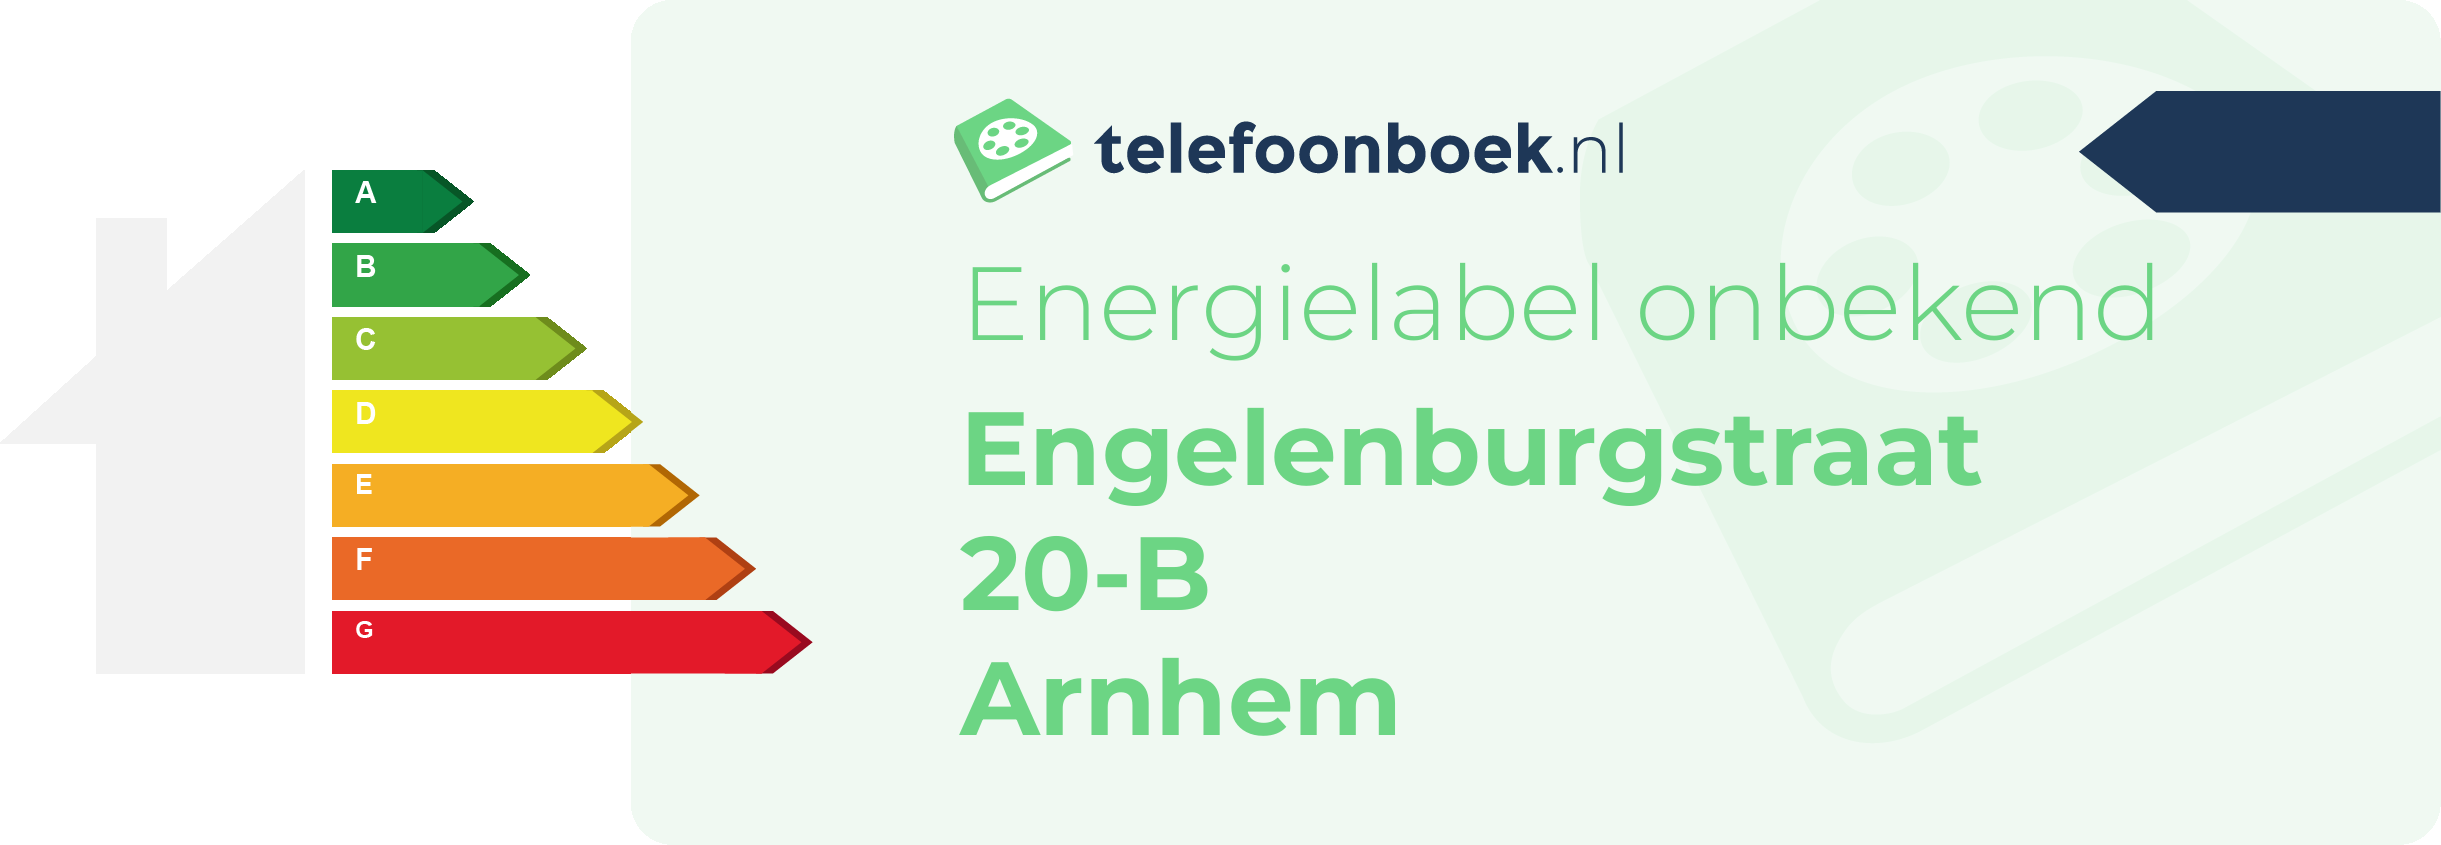 Energielabel Engelenburgstraat 20-B Arnhem